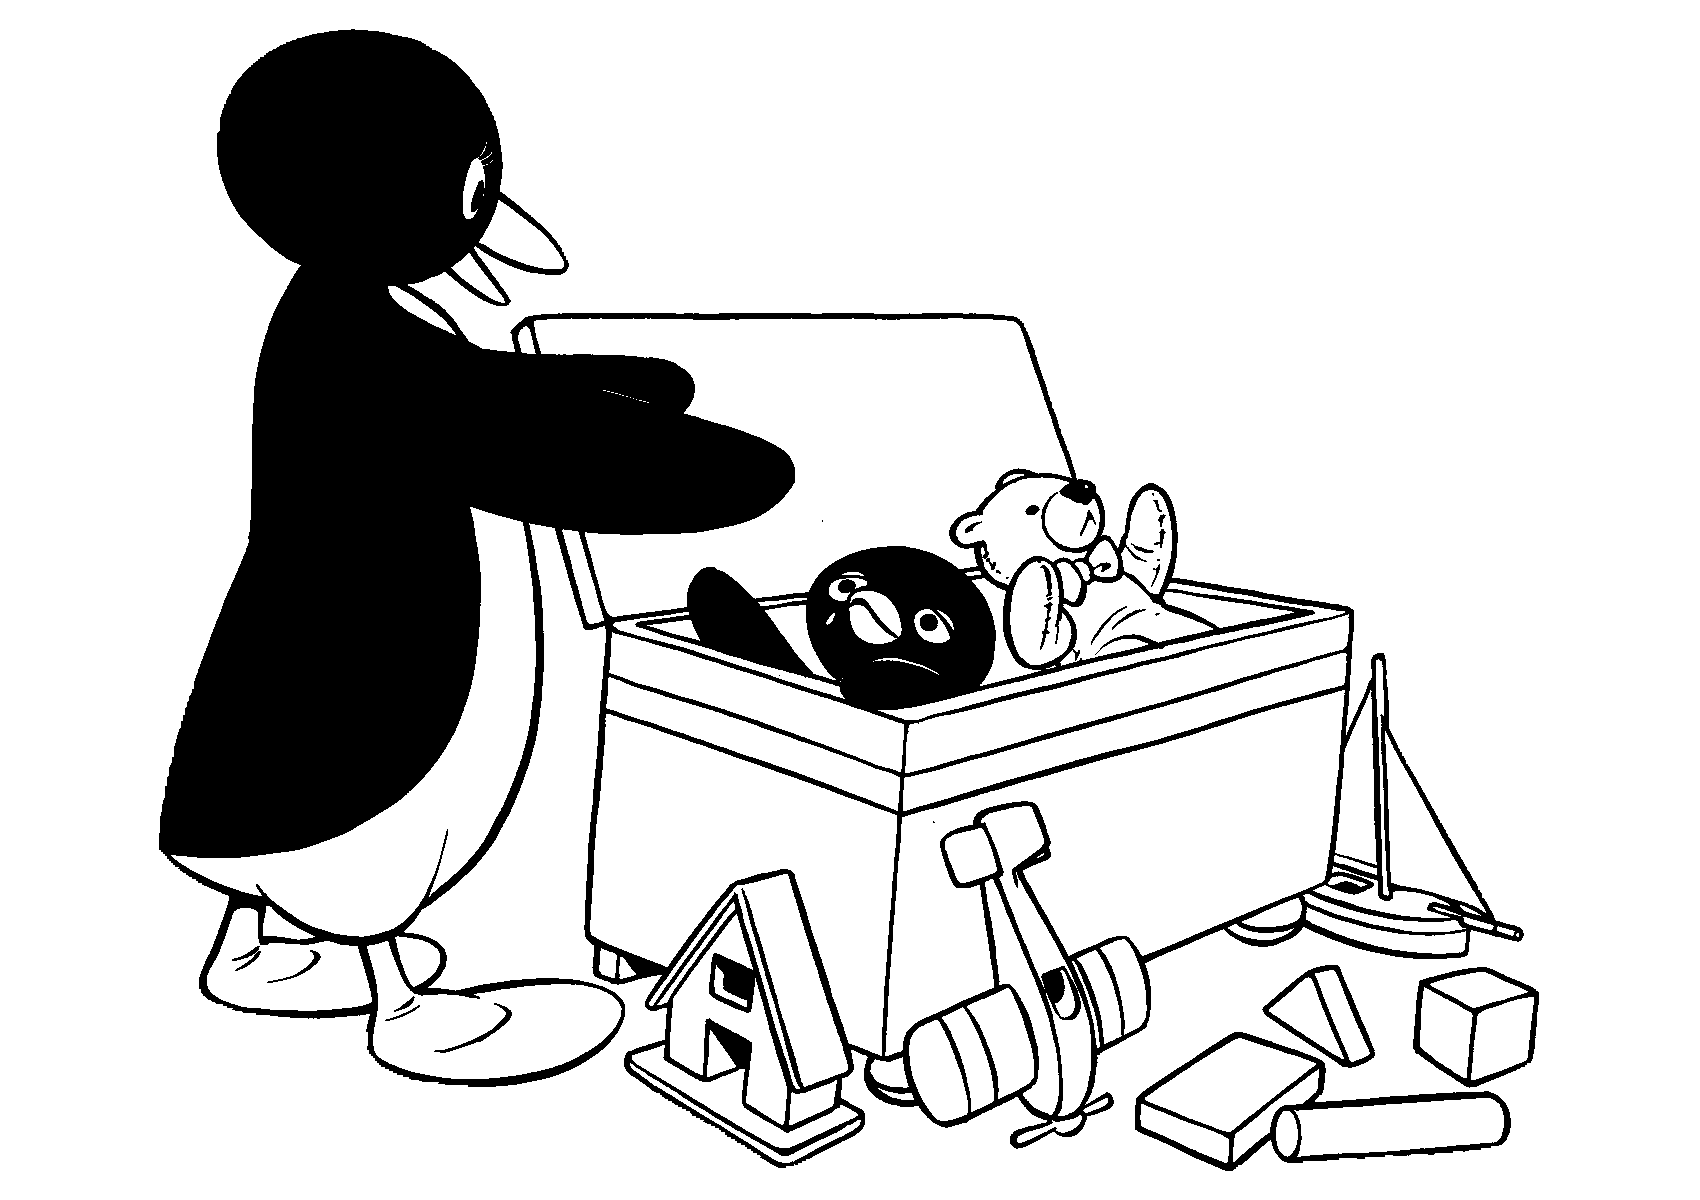 Pingu Coloring Pages